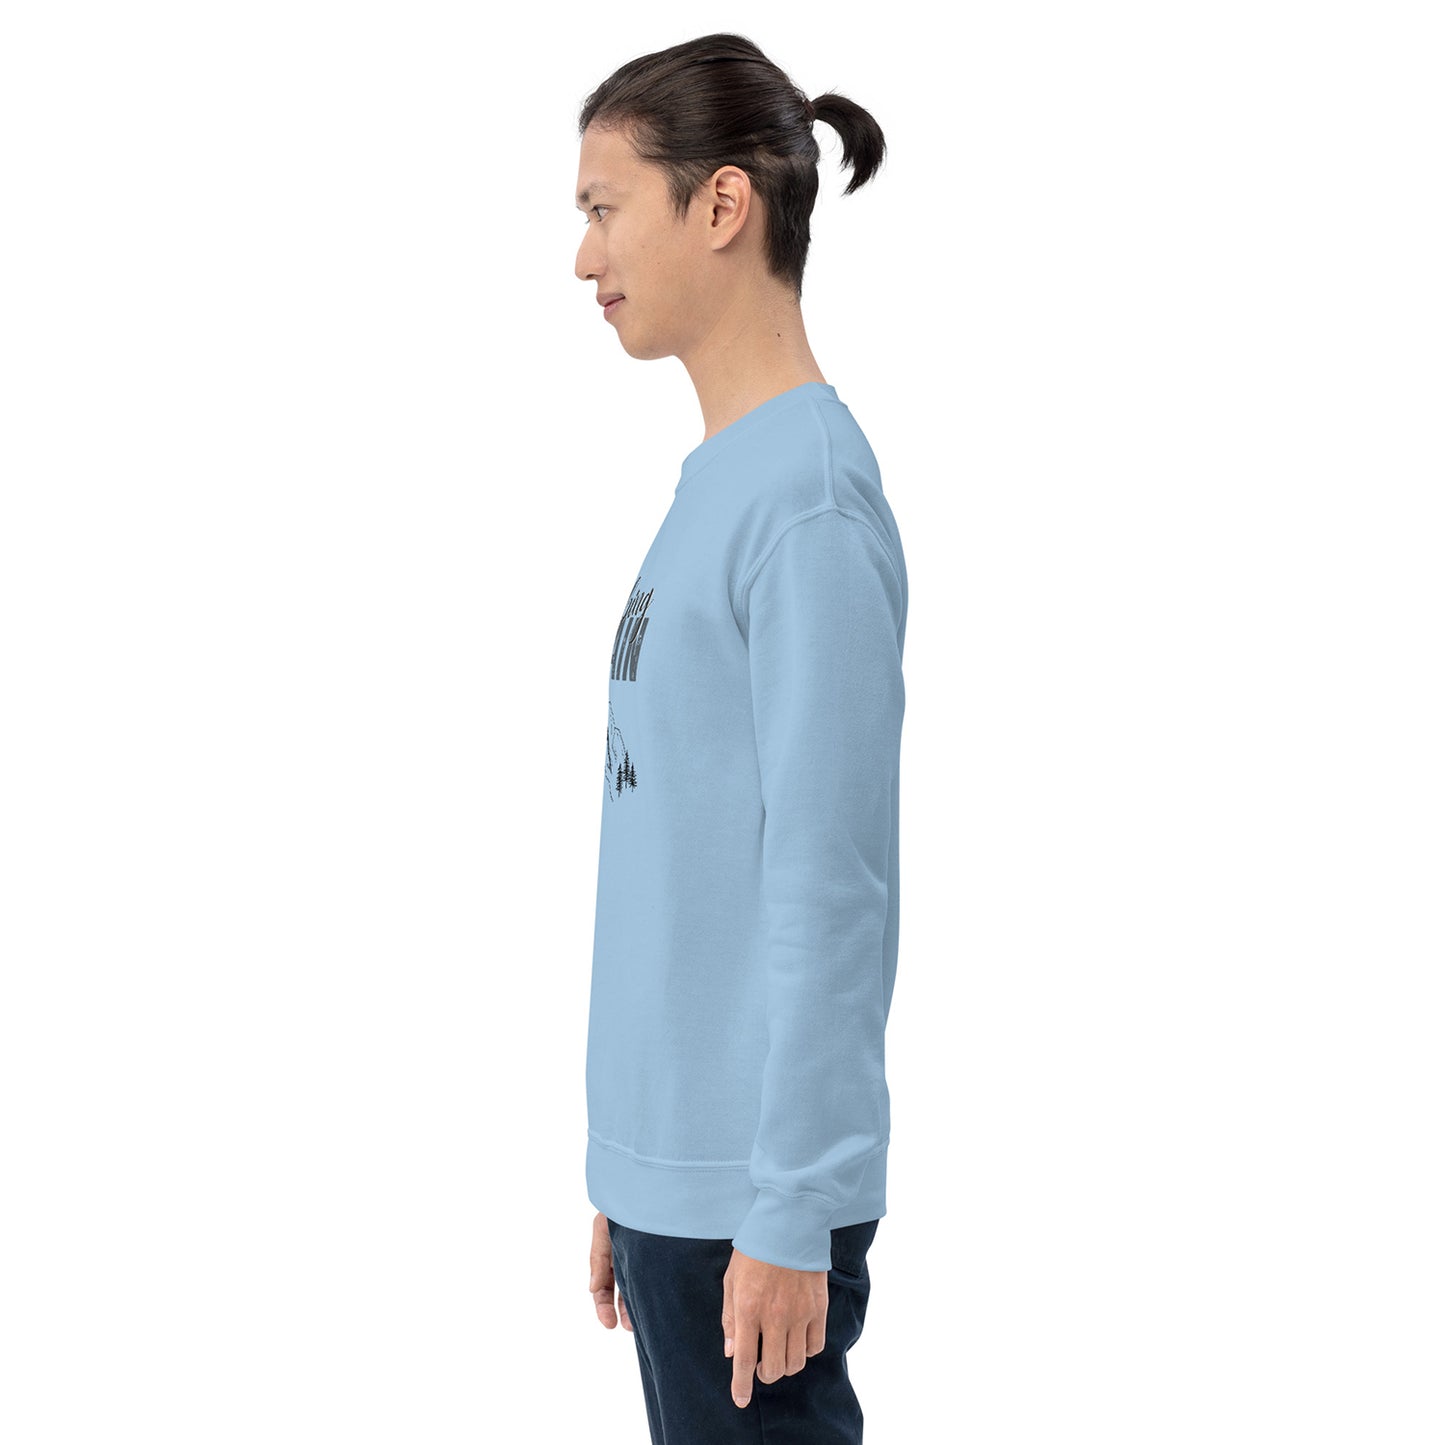 Classic Fit Sweatshirt with Air-Spun Softness